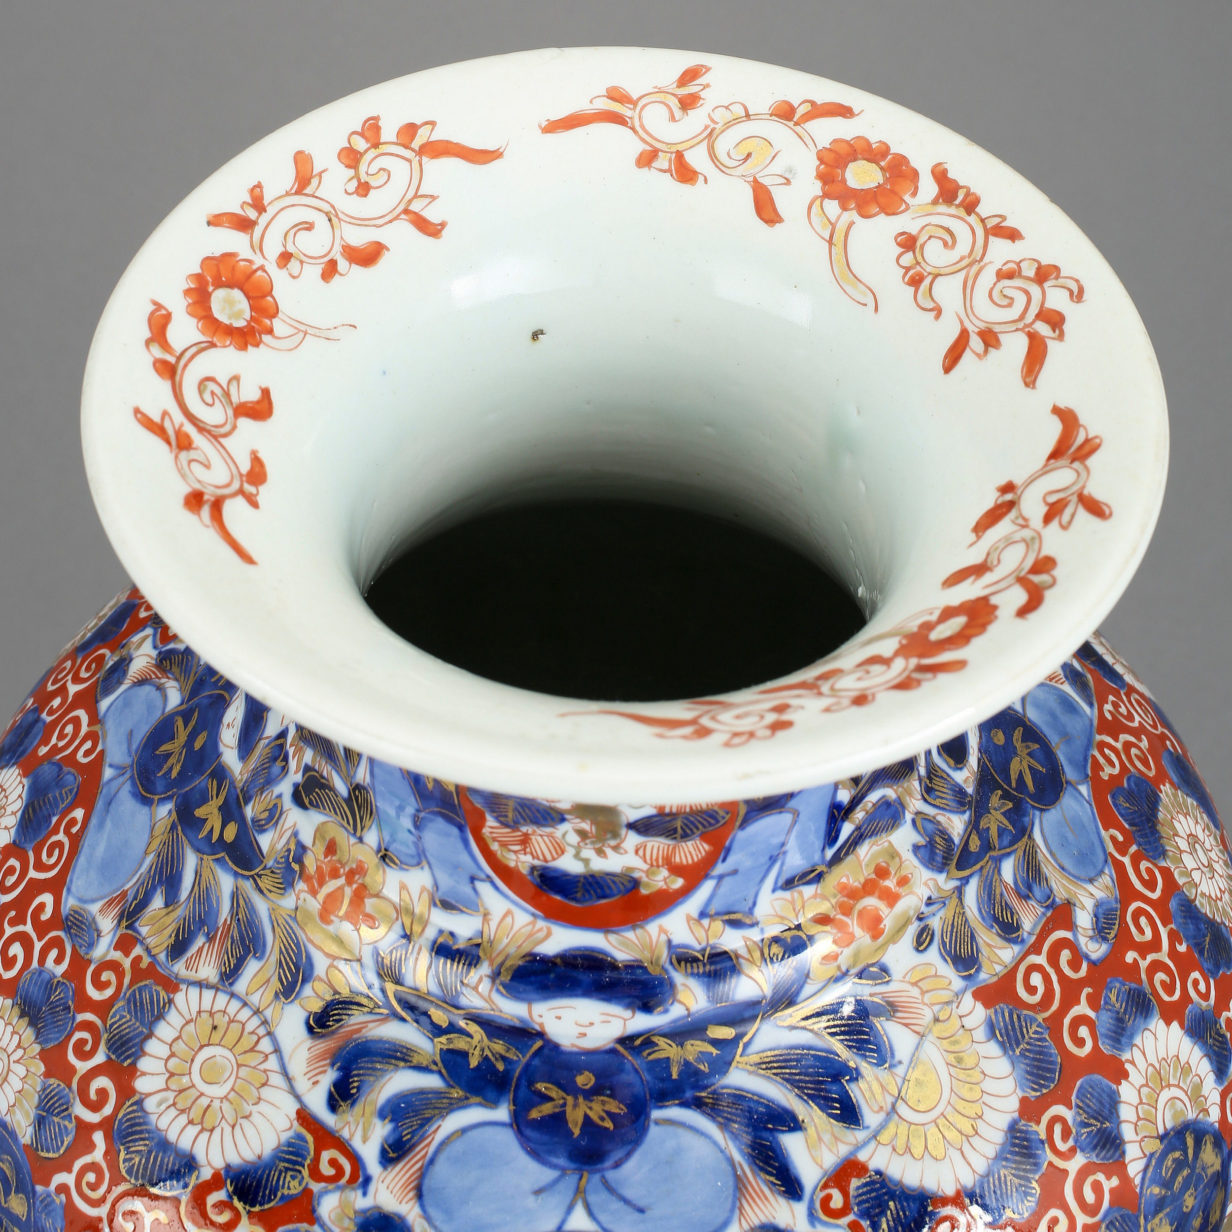 A 19th century imari baluster porcelain vase